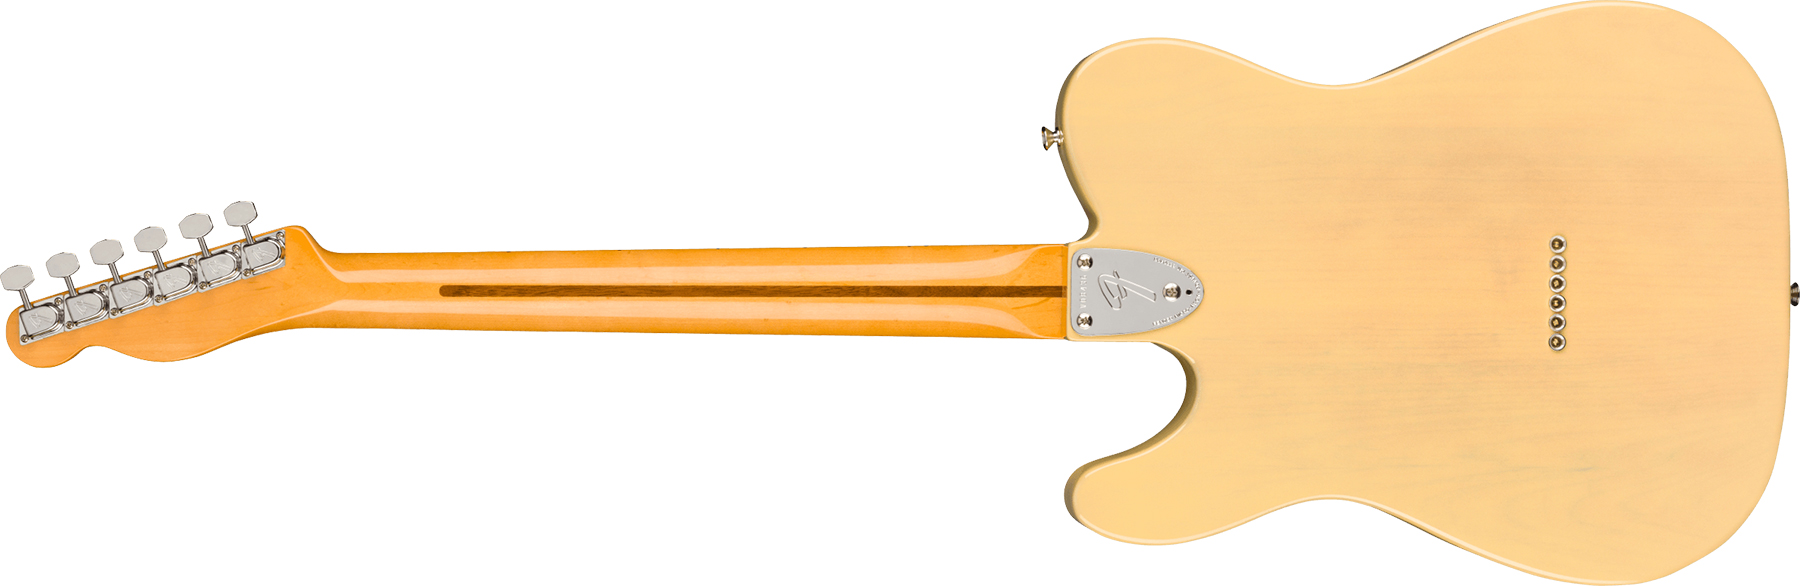 Fender Tele 70s Custom American Original Usa Sh Mn - Vintage Blonde - Tel shape electric guitar - Variation 1